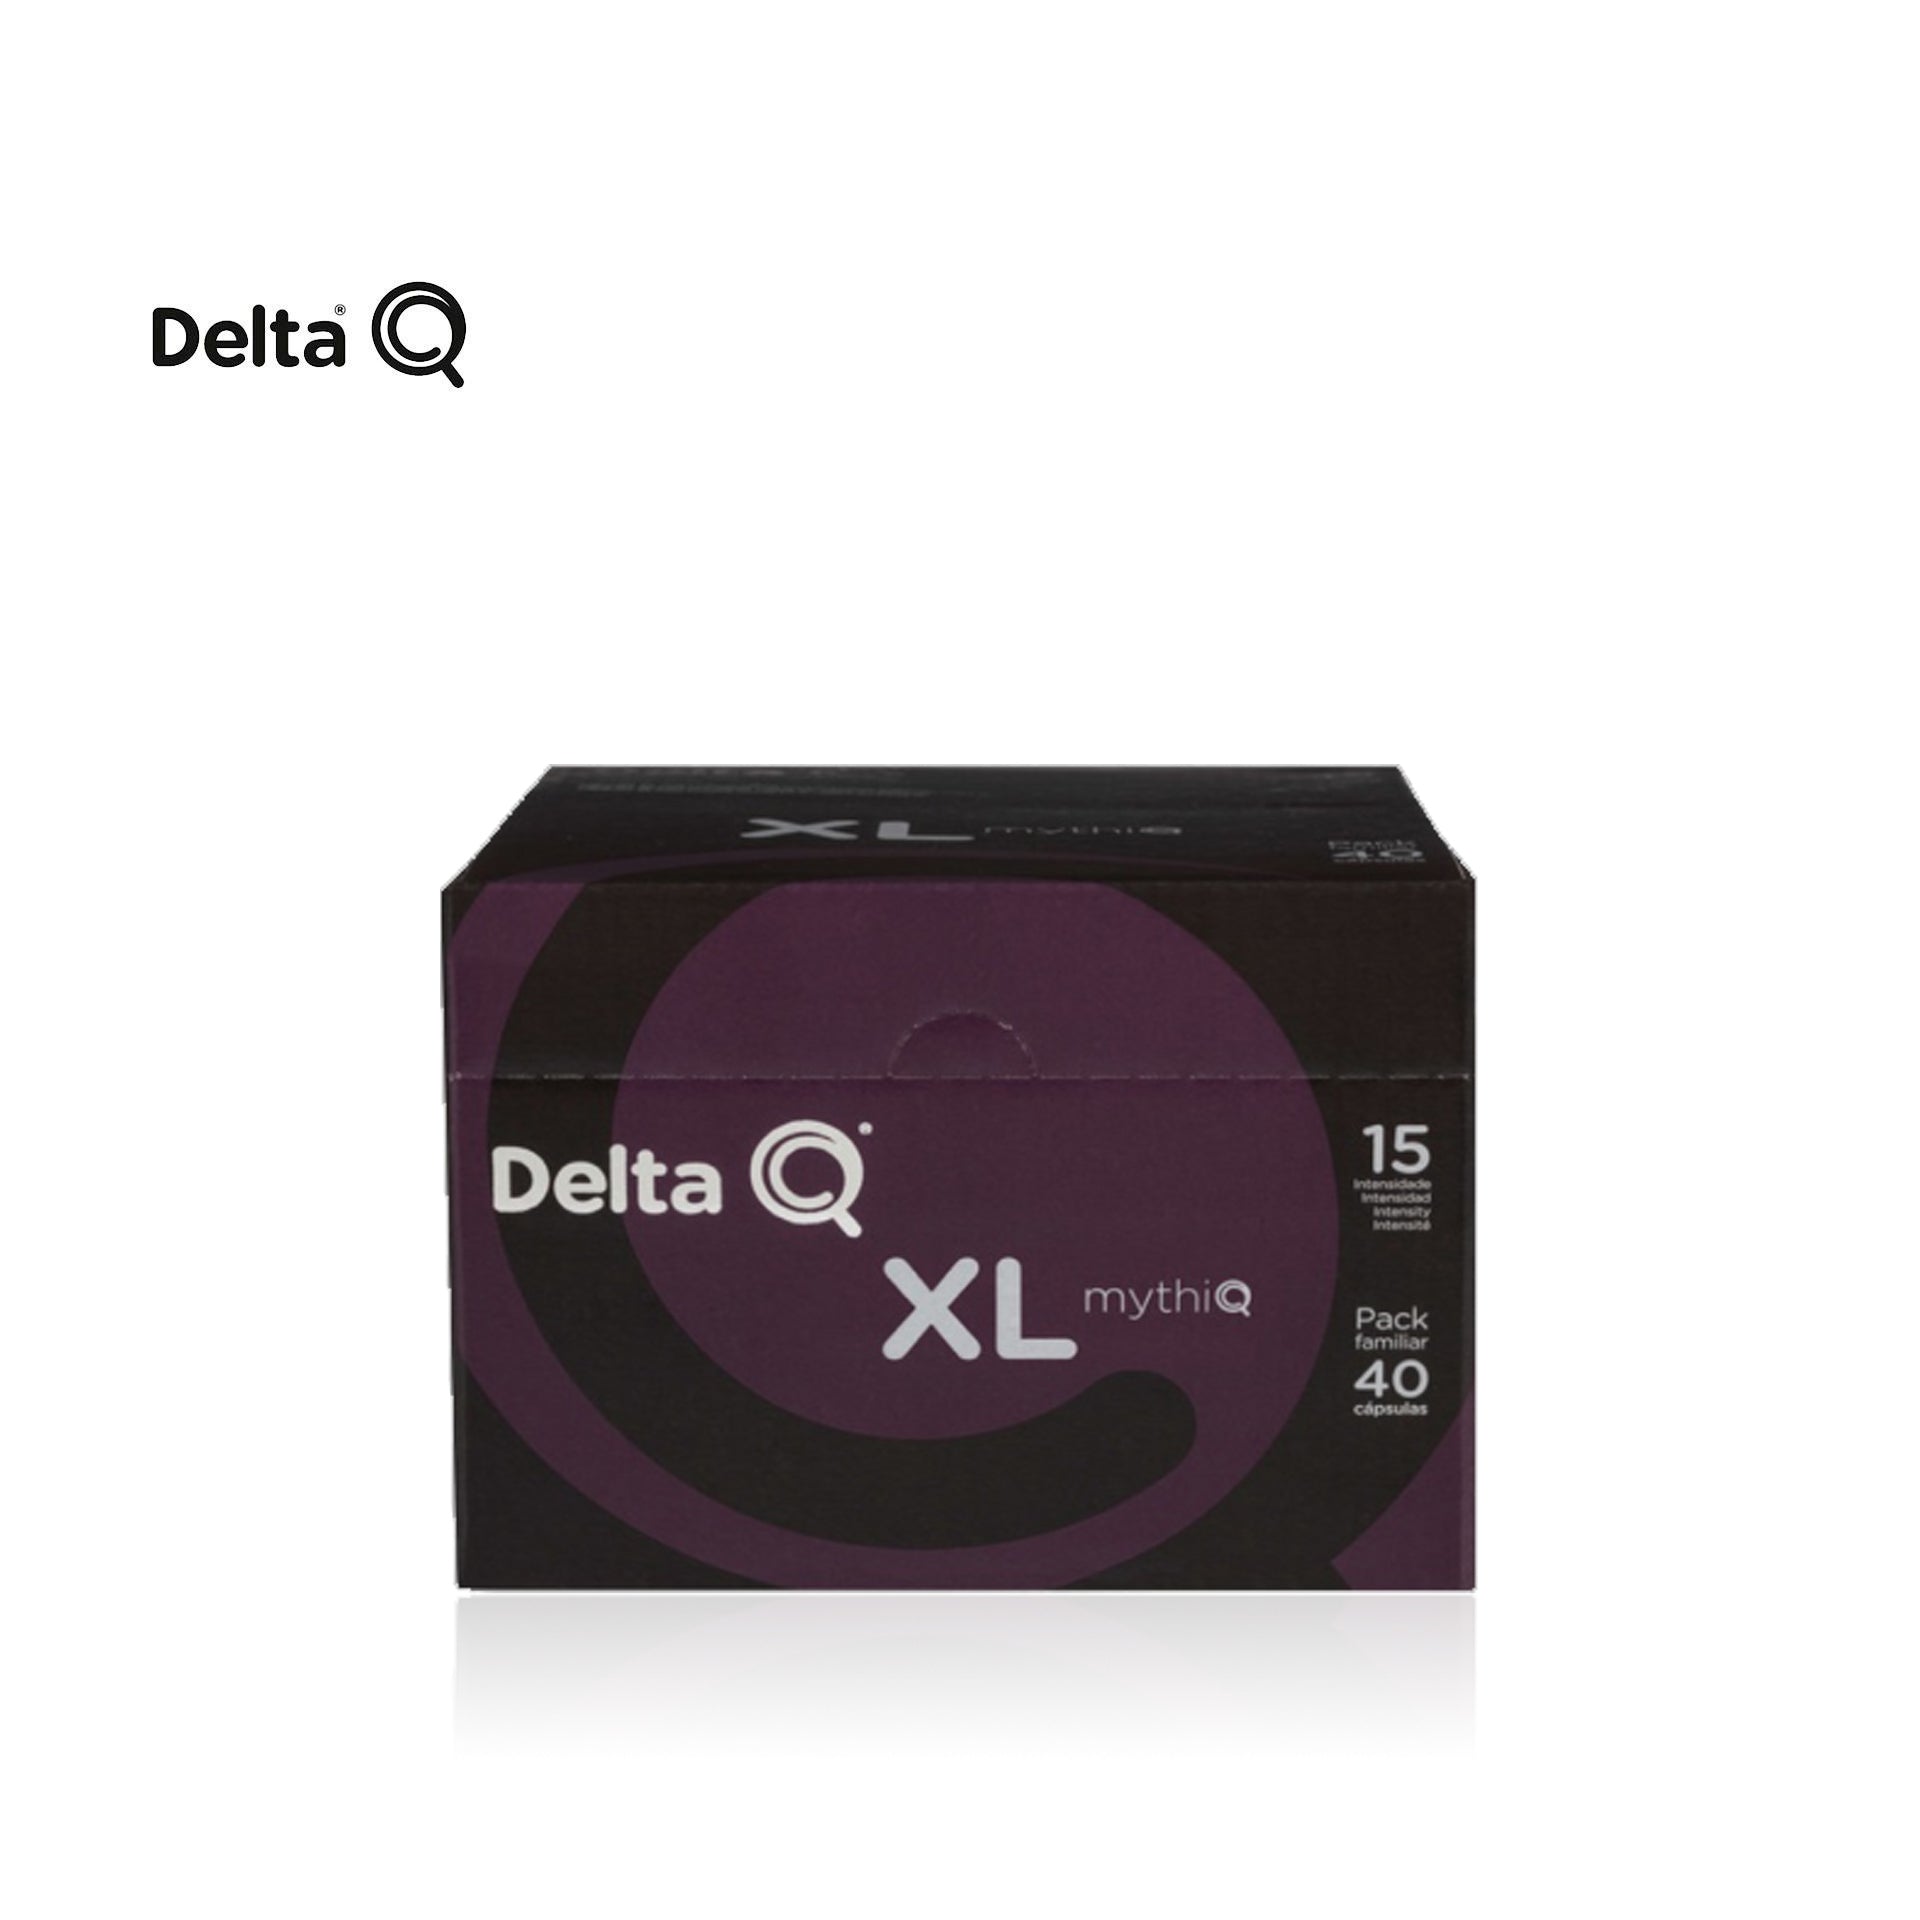 Delta Q Café Cápsulas mythiQ Intensidade 15 Pack XL - 40 un